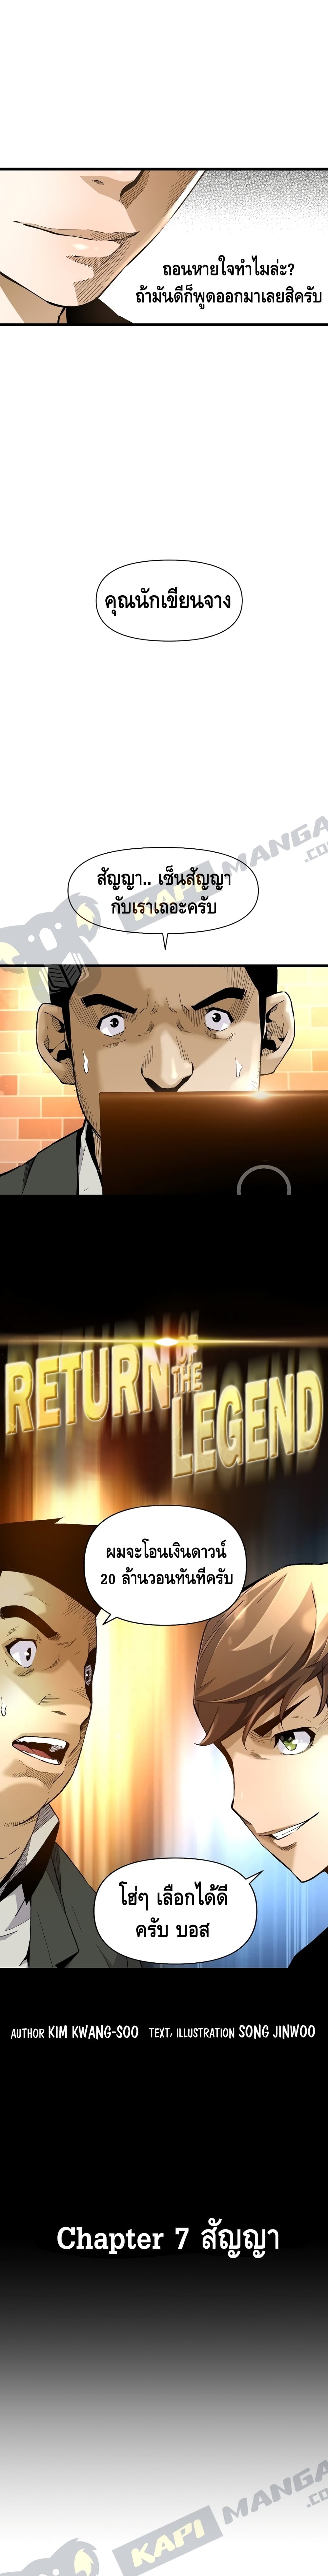 Return of the Legend 7-7